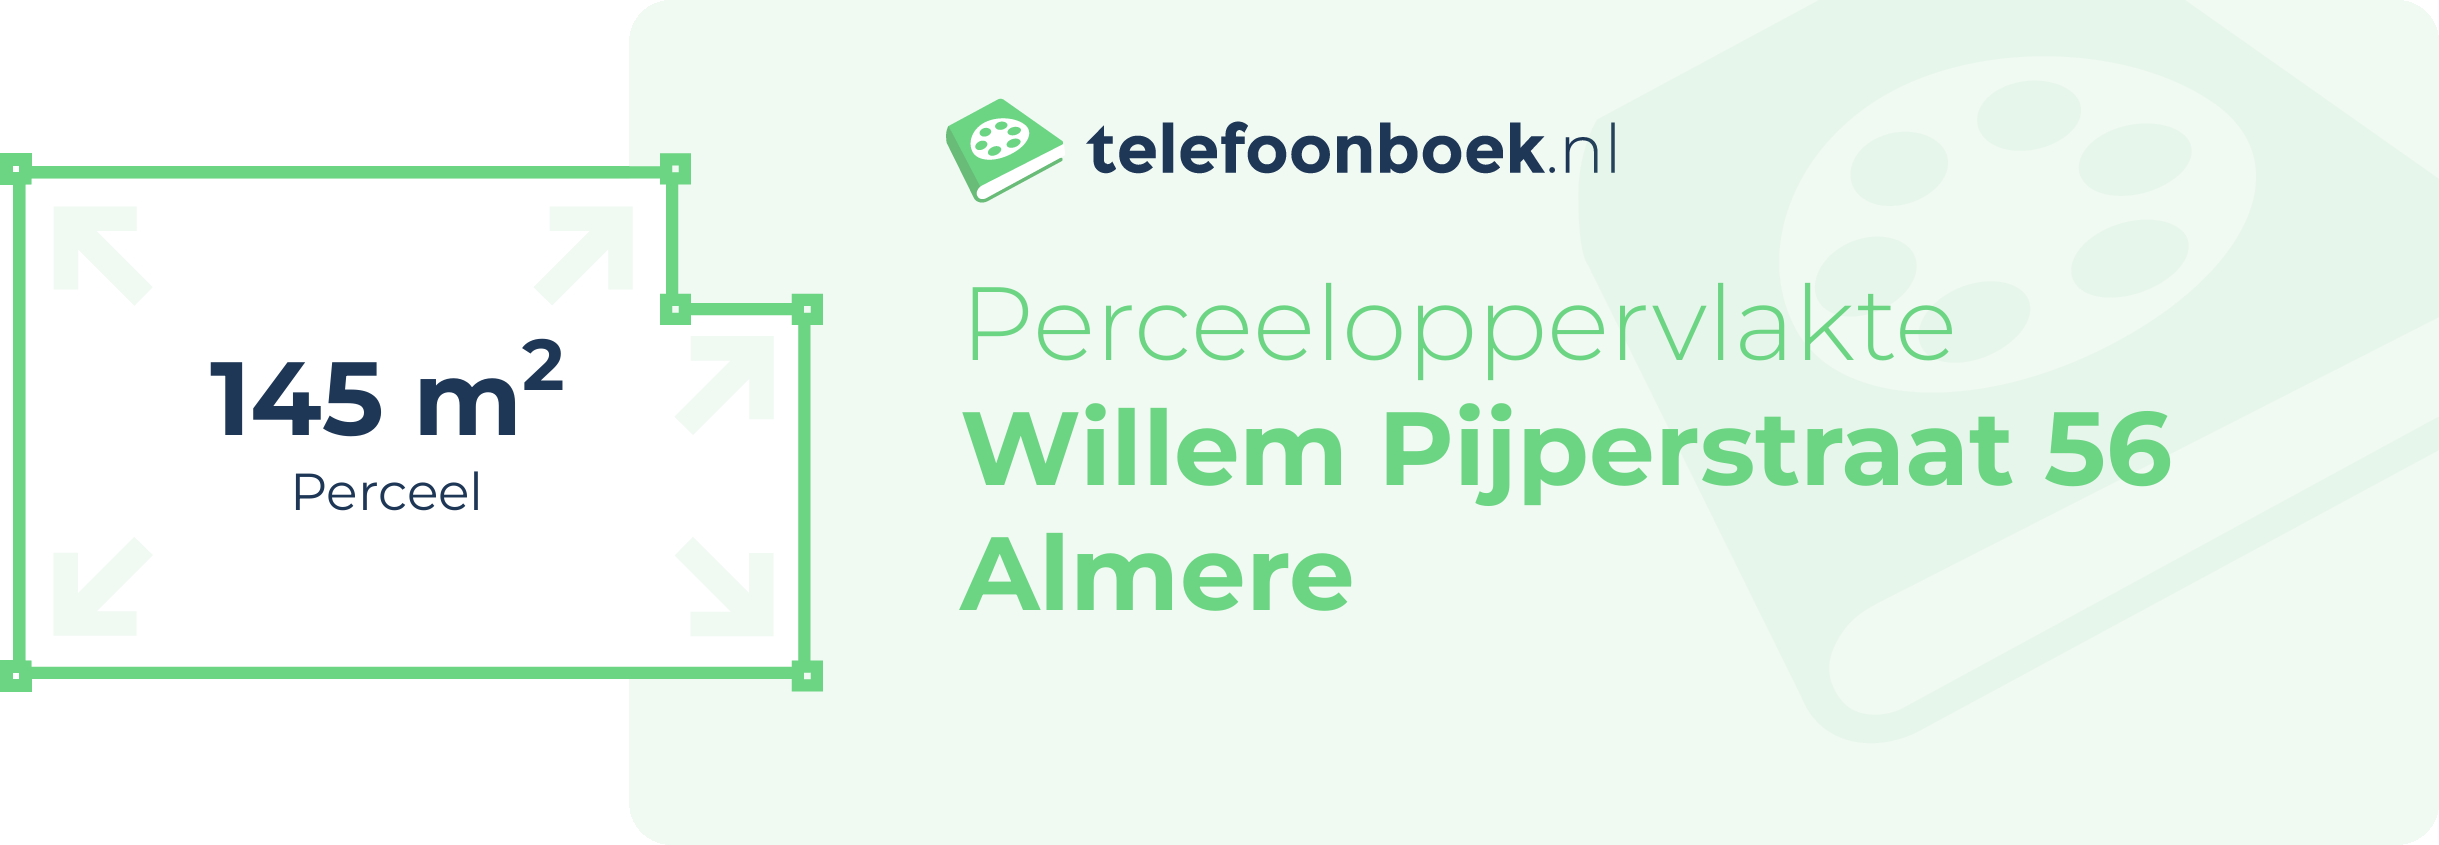 Perceeloppervlakte Willem Pijperstraat 56 Almere